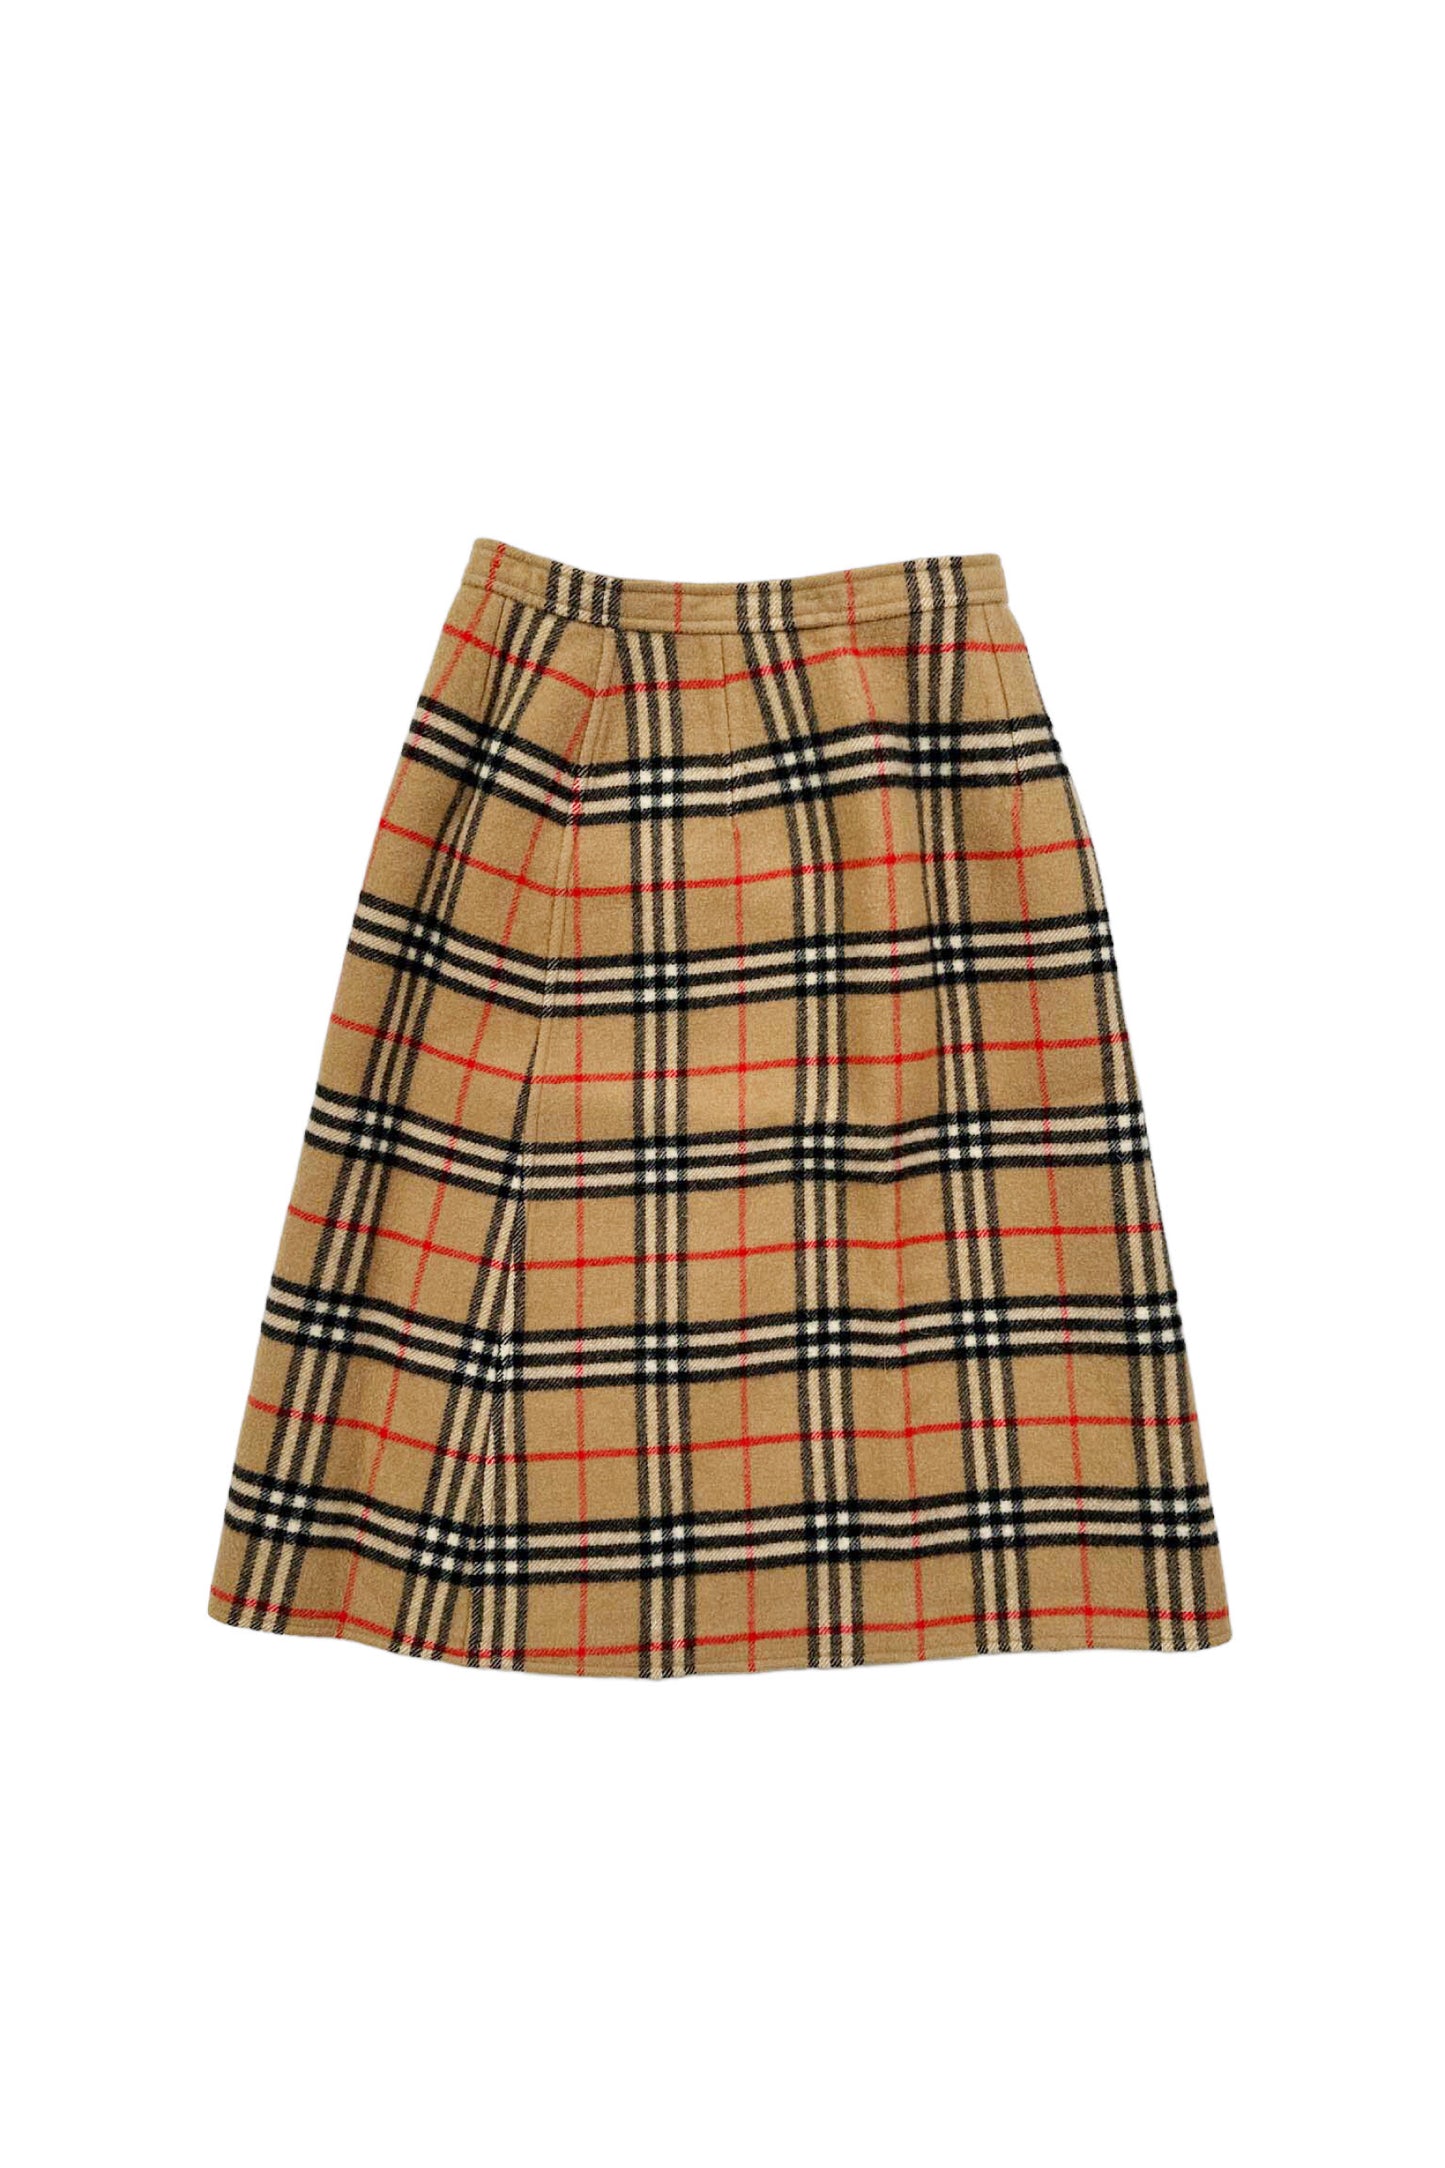 90's wool check skirt